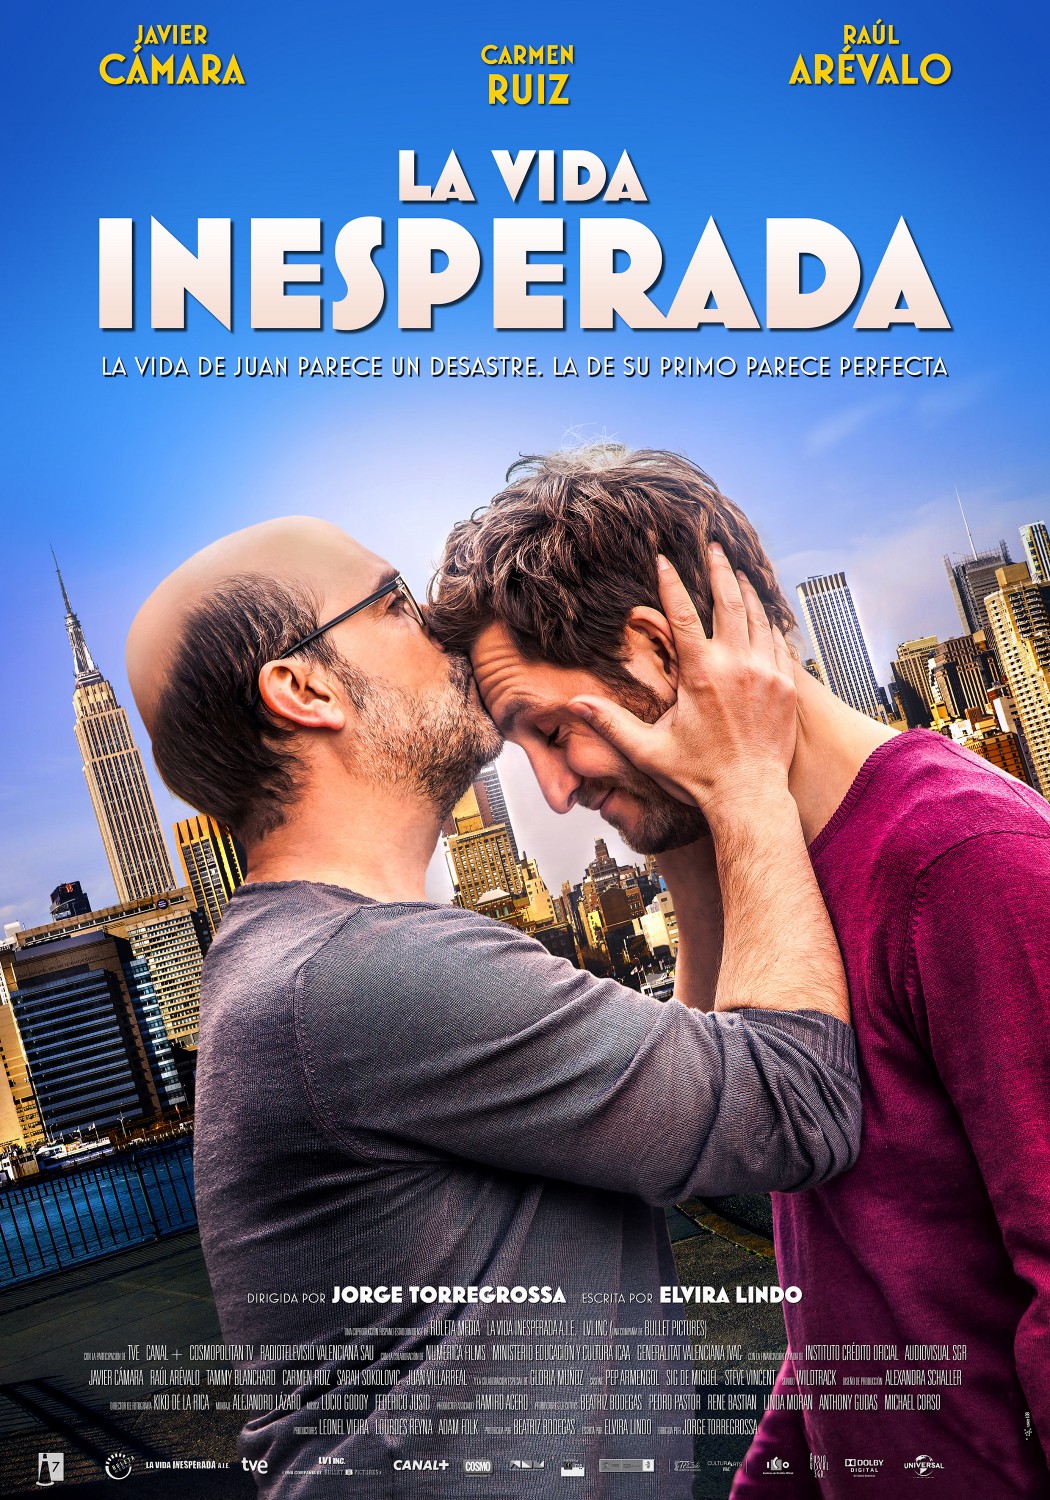 Extra Large Movie Poster Image for La vida inesperada 